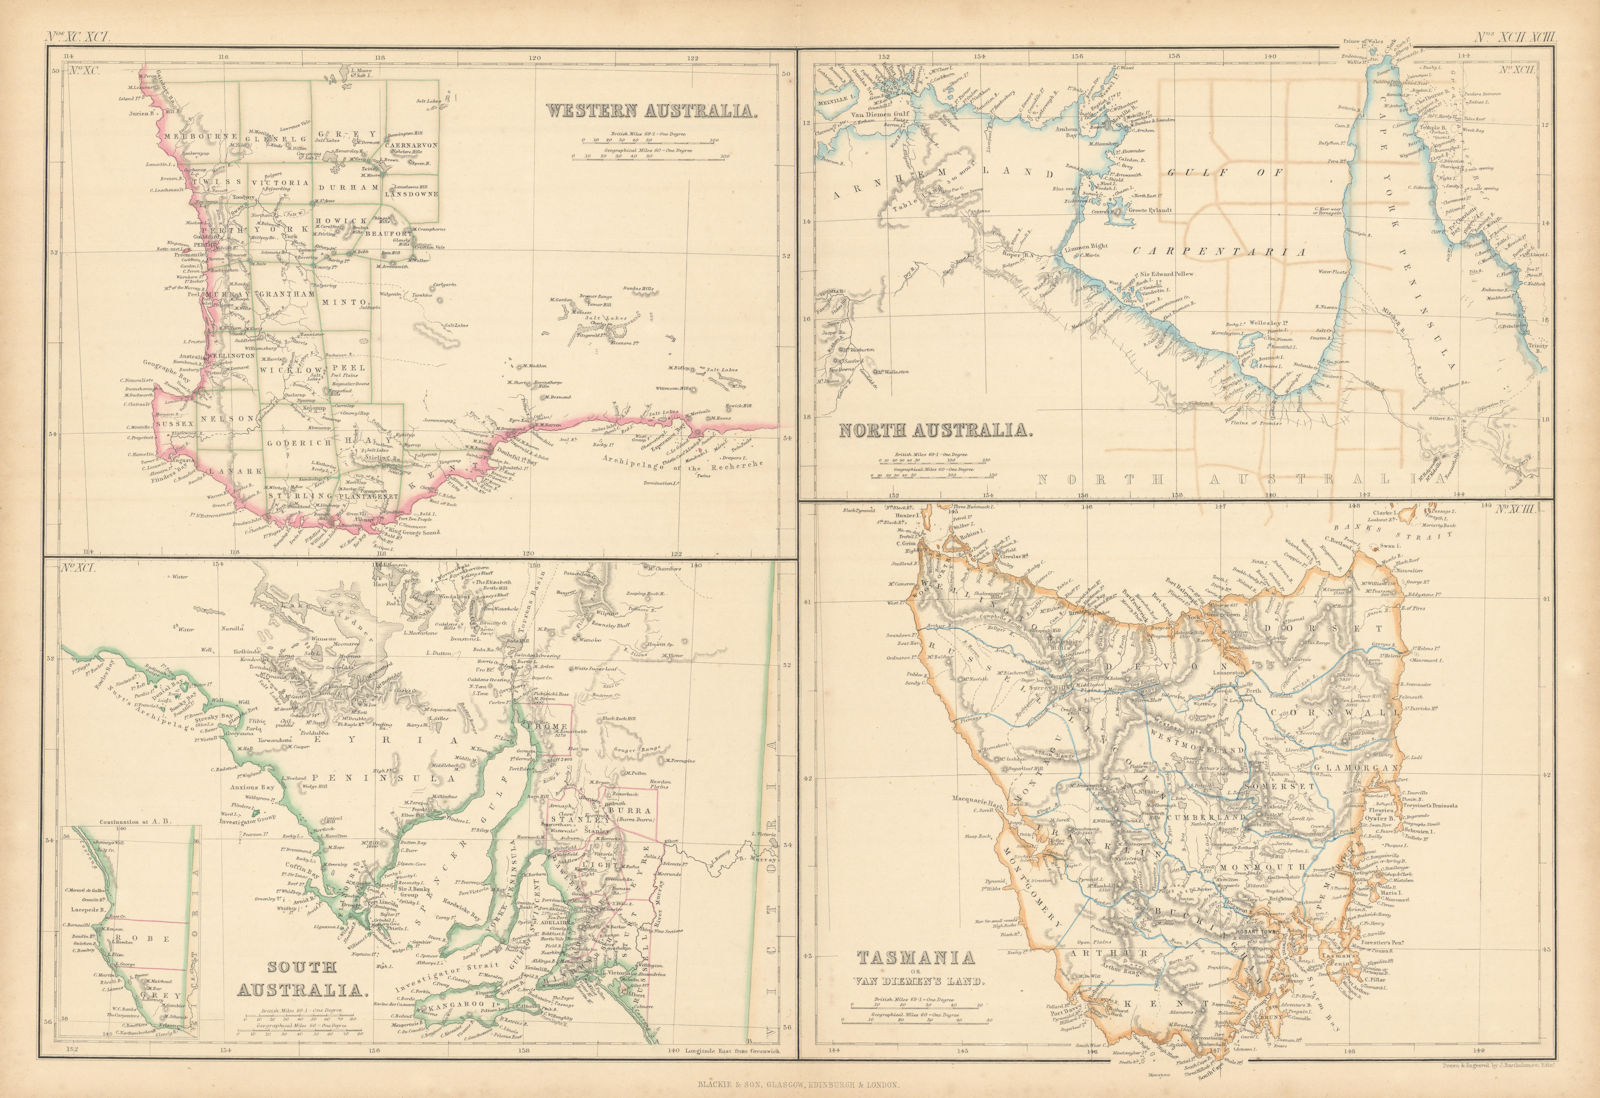 Western, South, North Australia. Tasmania Van Diemen's Land BARTHOLOMEW 1859 map